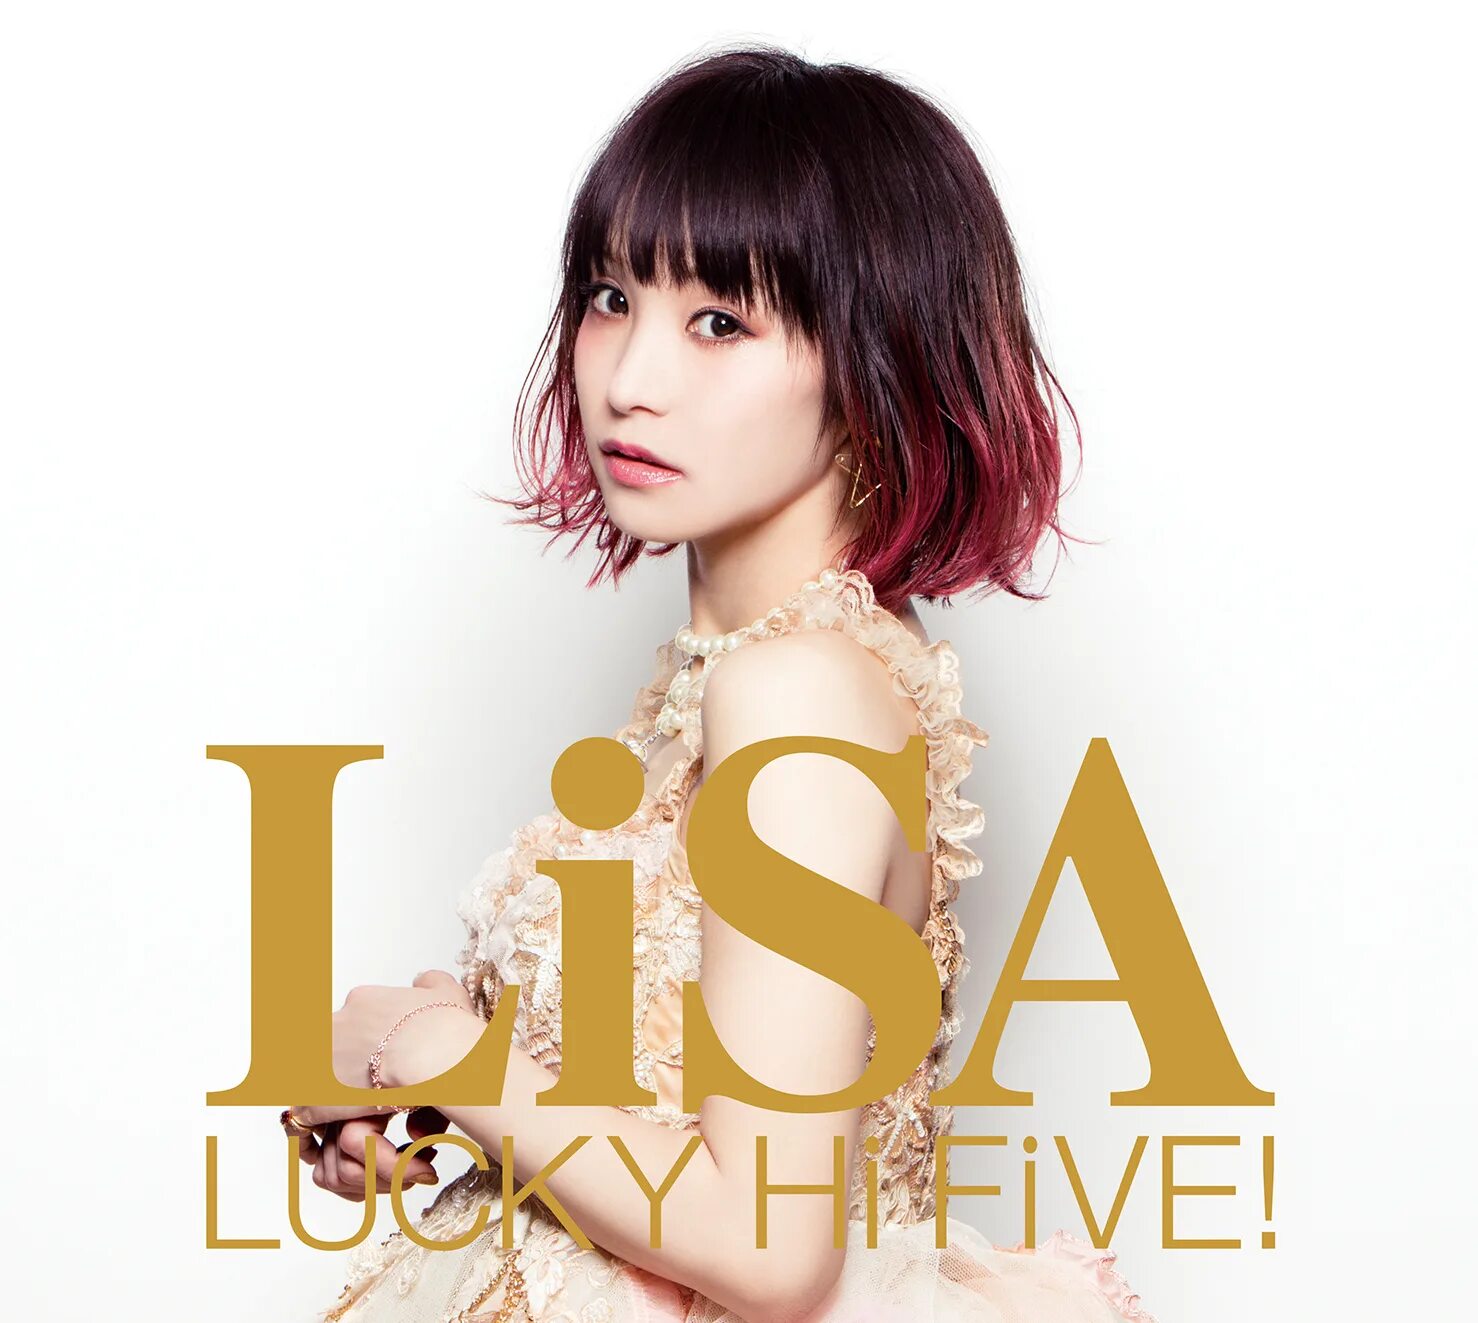 Lisa википедия. Lisa певица. Lisa j Pop. Lisa японская певица 2021. Lisa японская певица обложка.